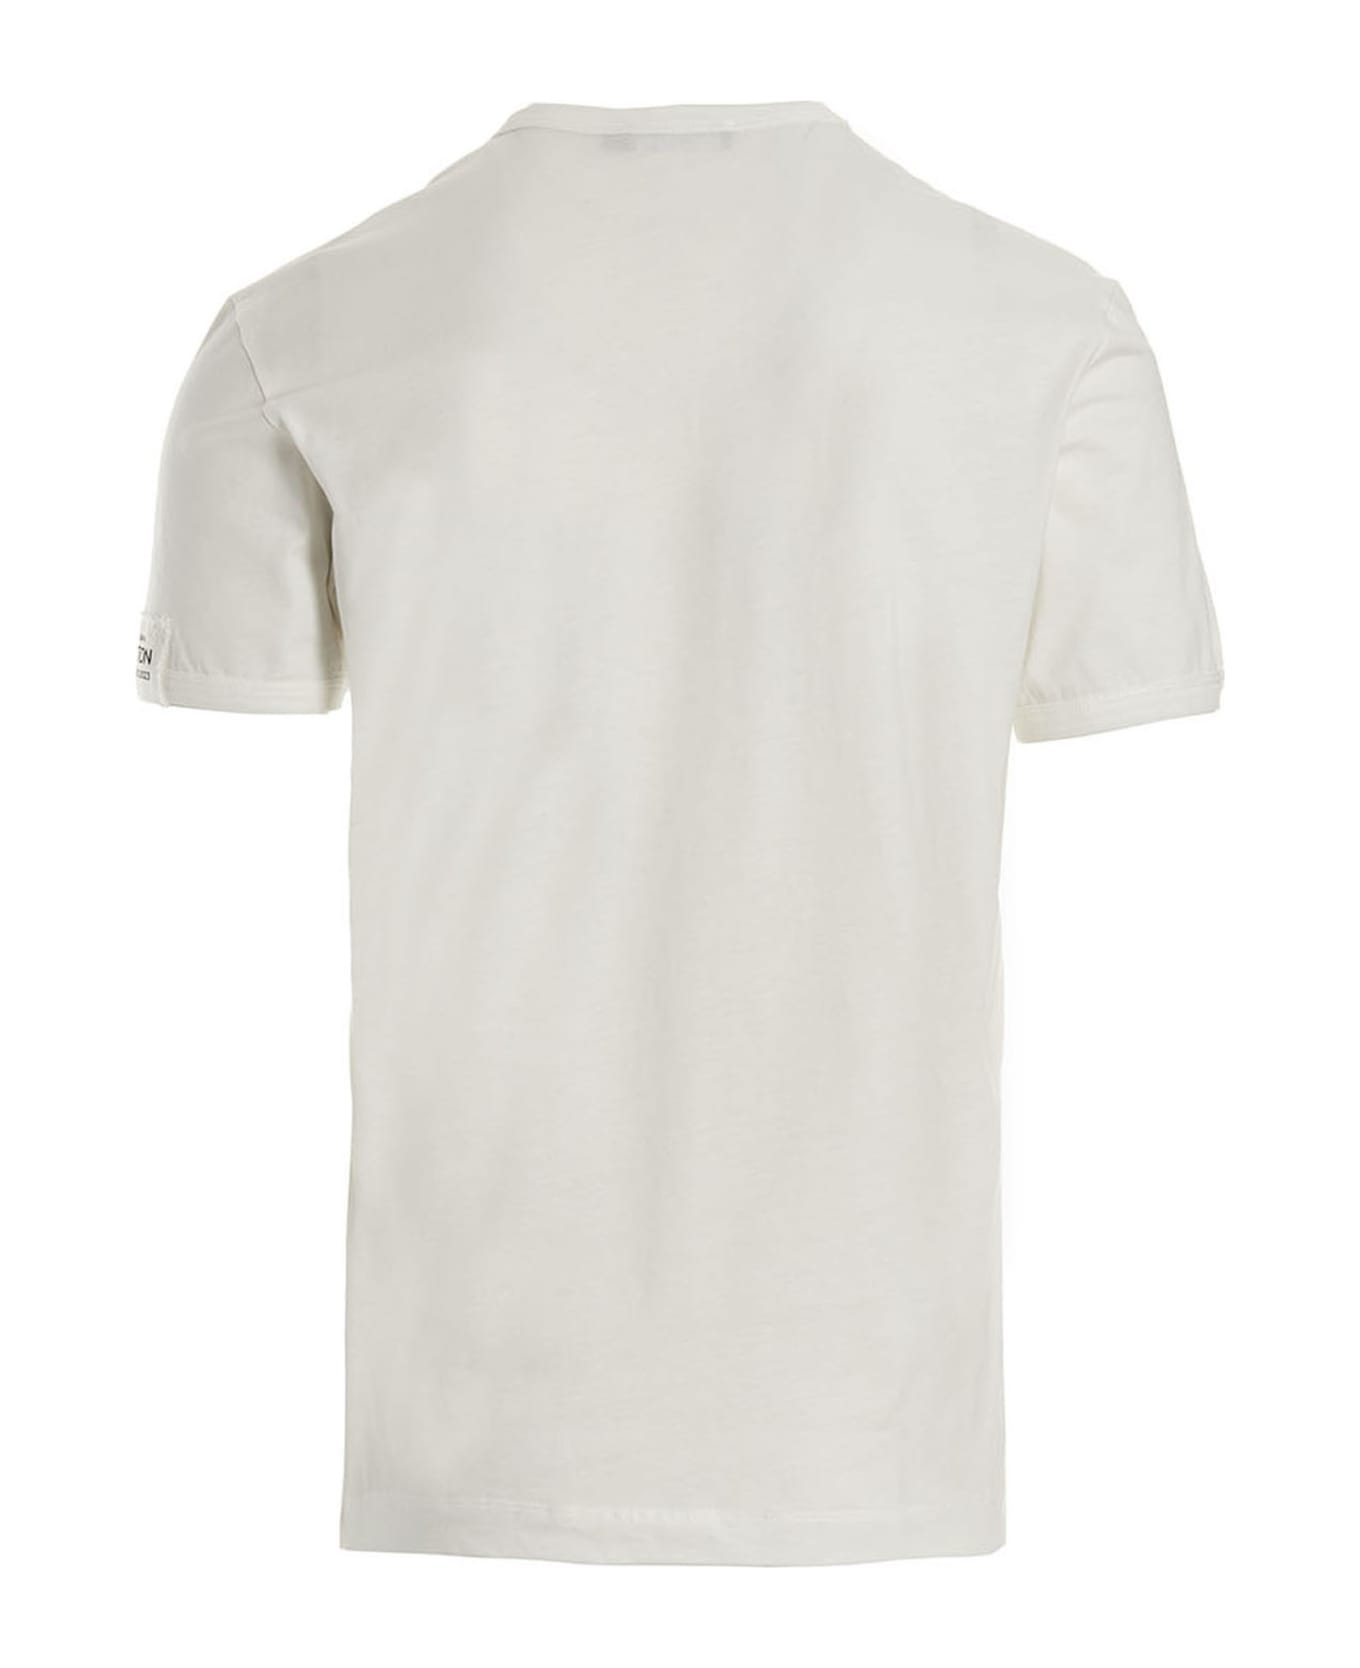 Dolce & Gabbana 're-edition 's/s 2006' T-shirt - White